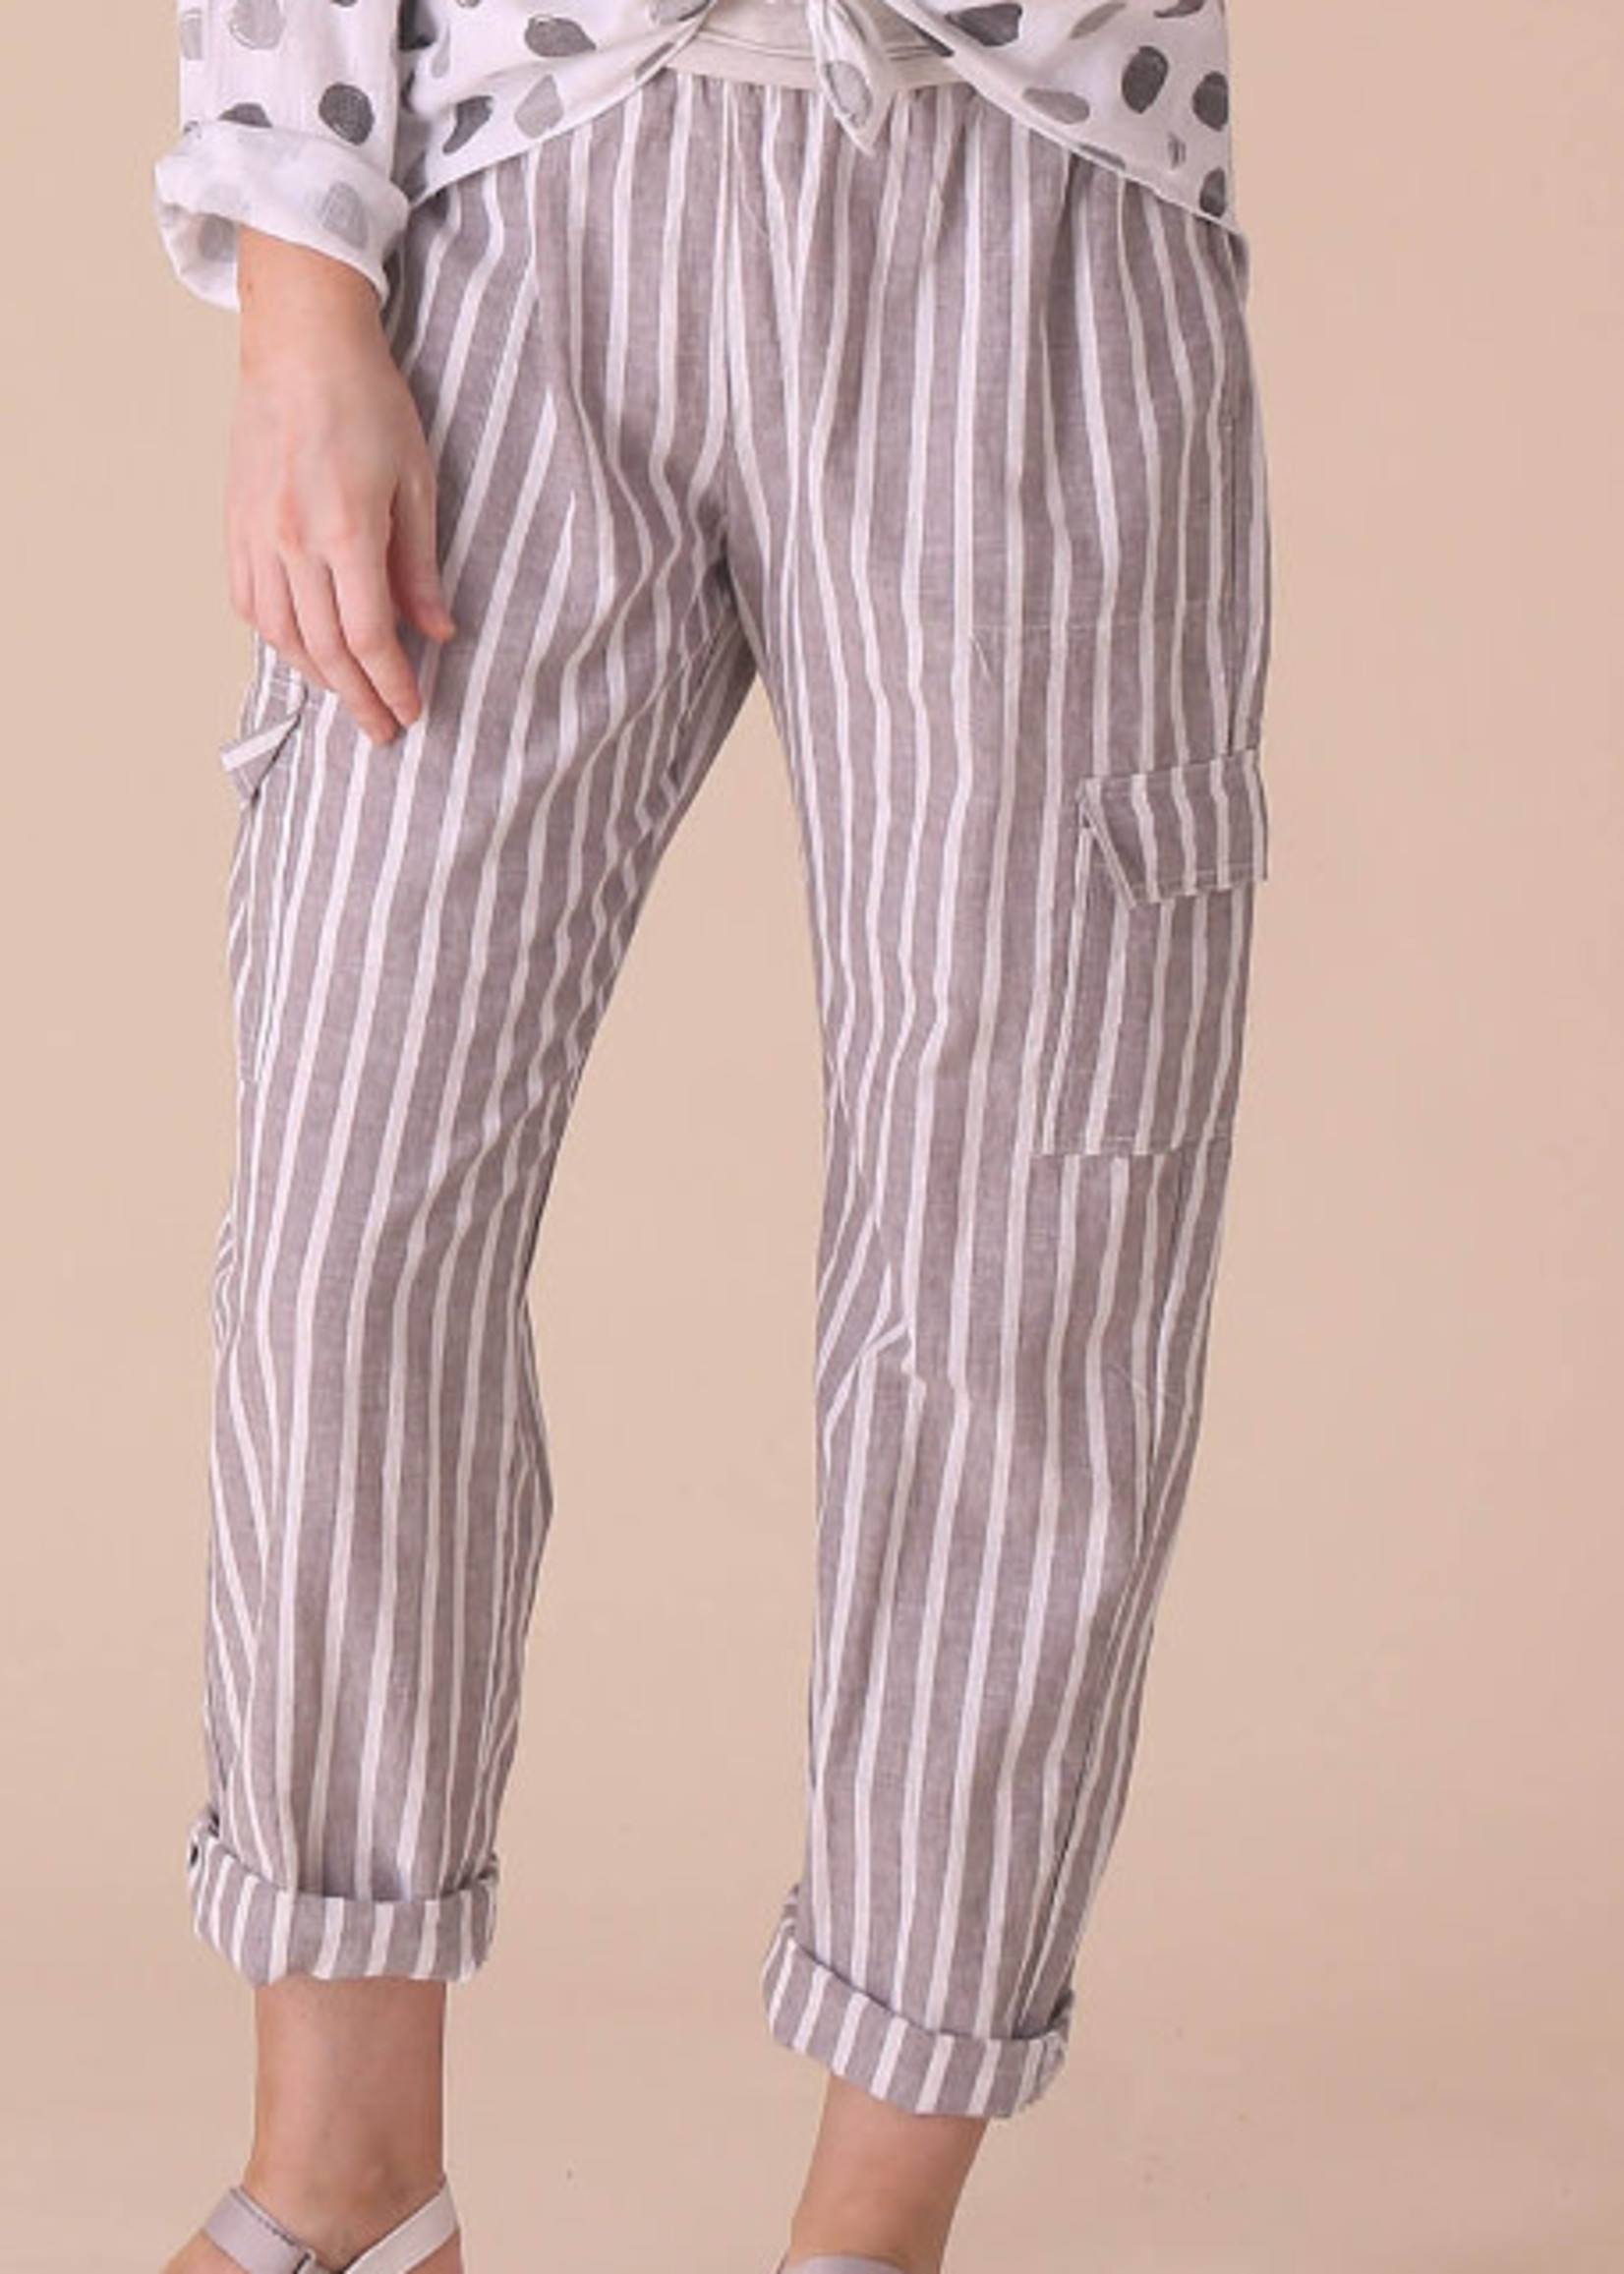 Fenini Grey Striped Cargo Pants With Pockets